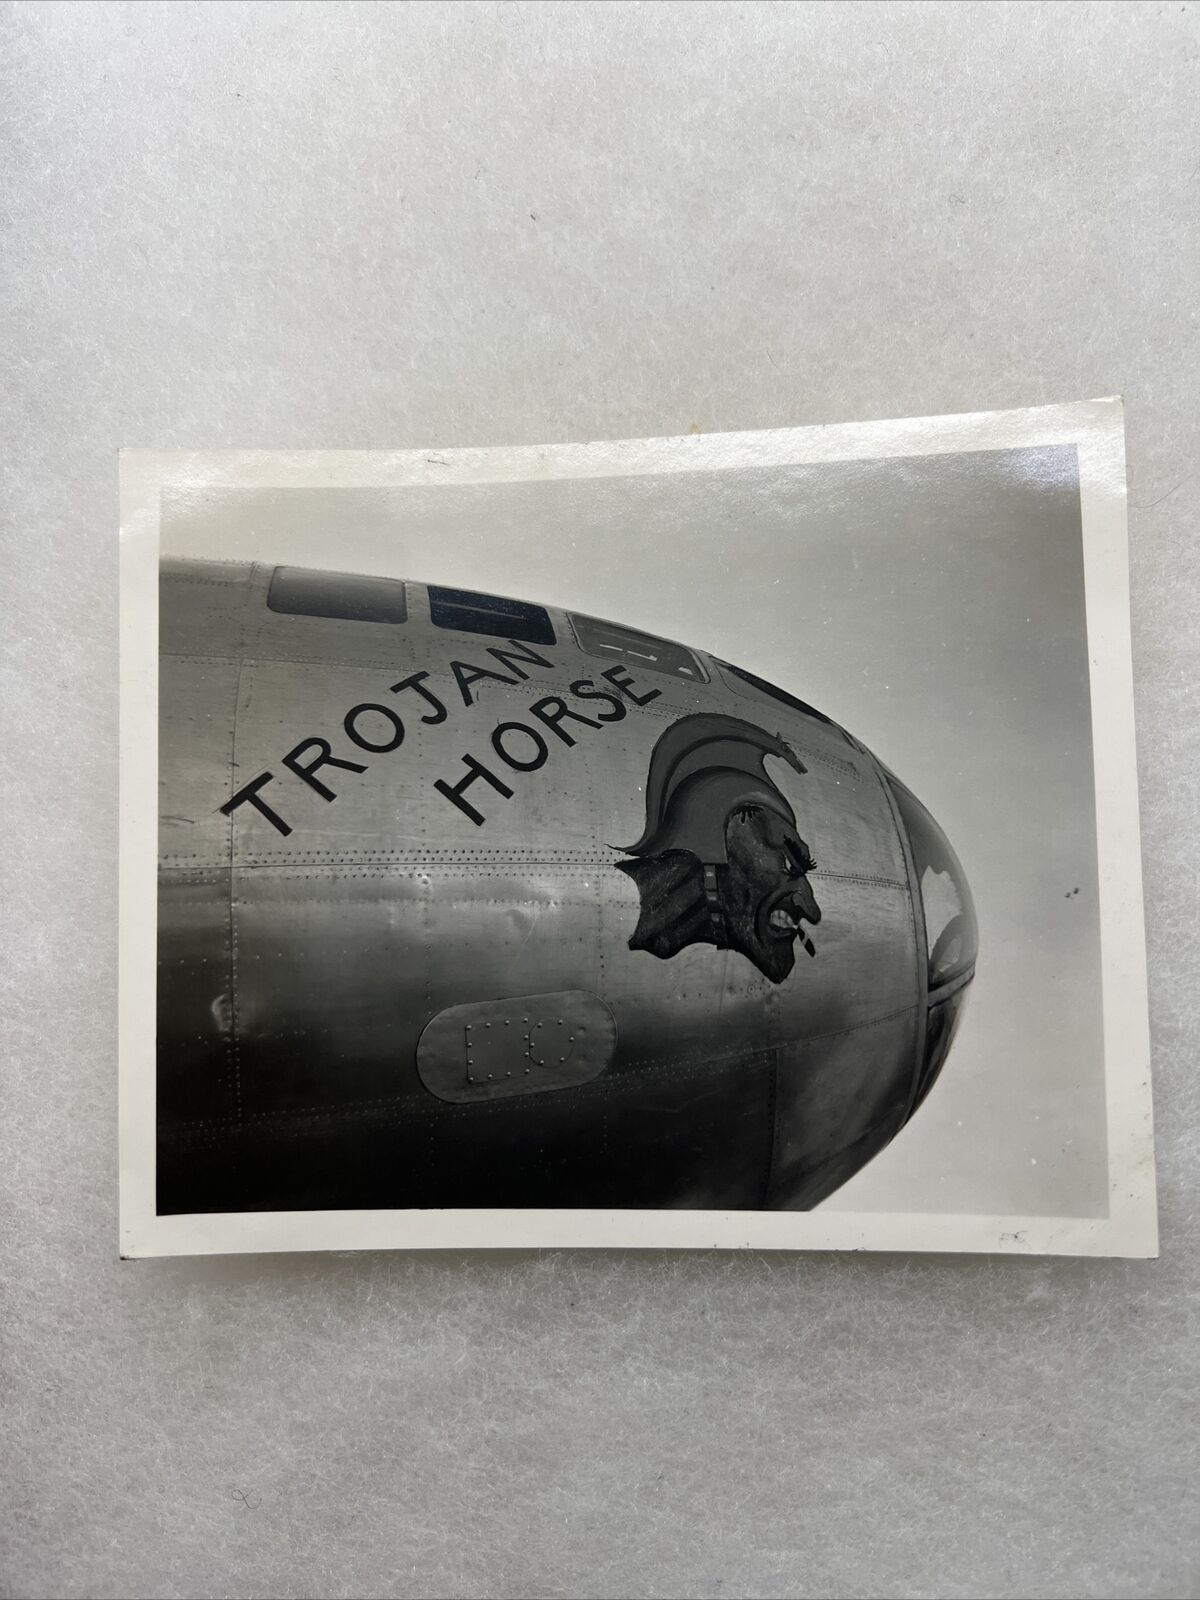 WW2 US Army Air Corps Nose Art “Trojan Horse” Plane Photo (V102